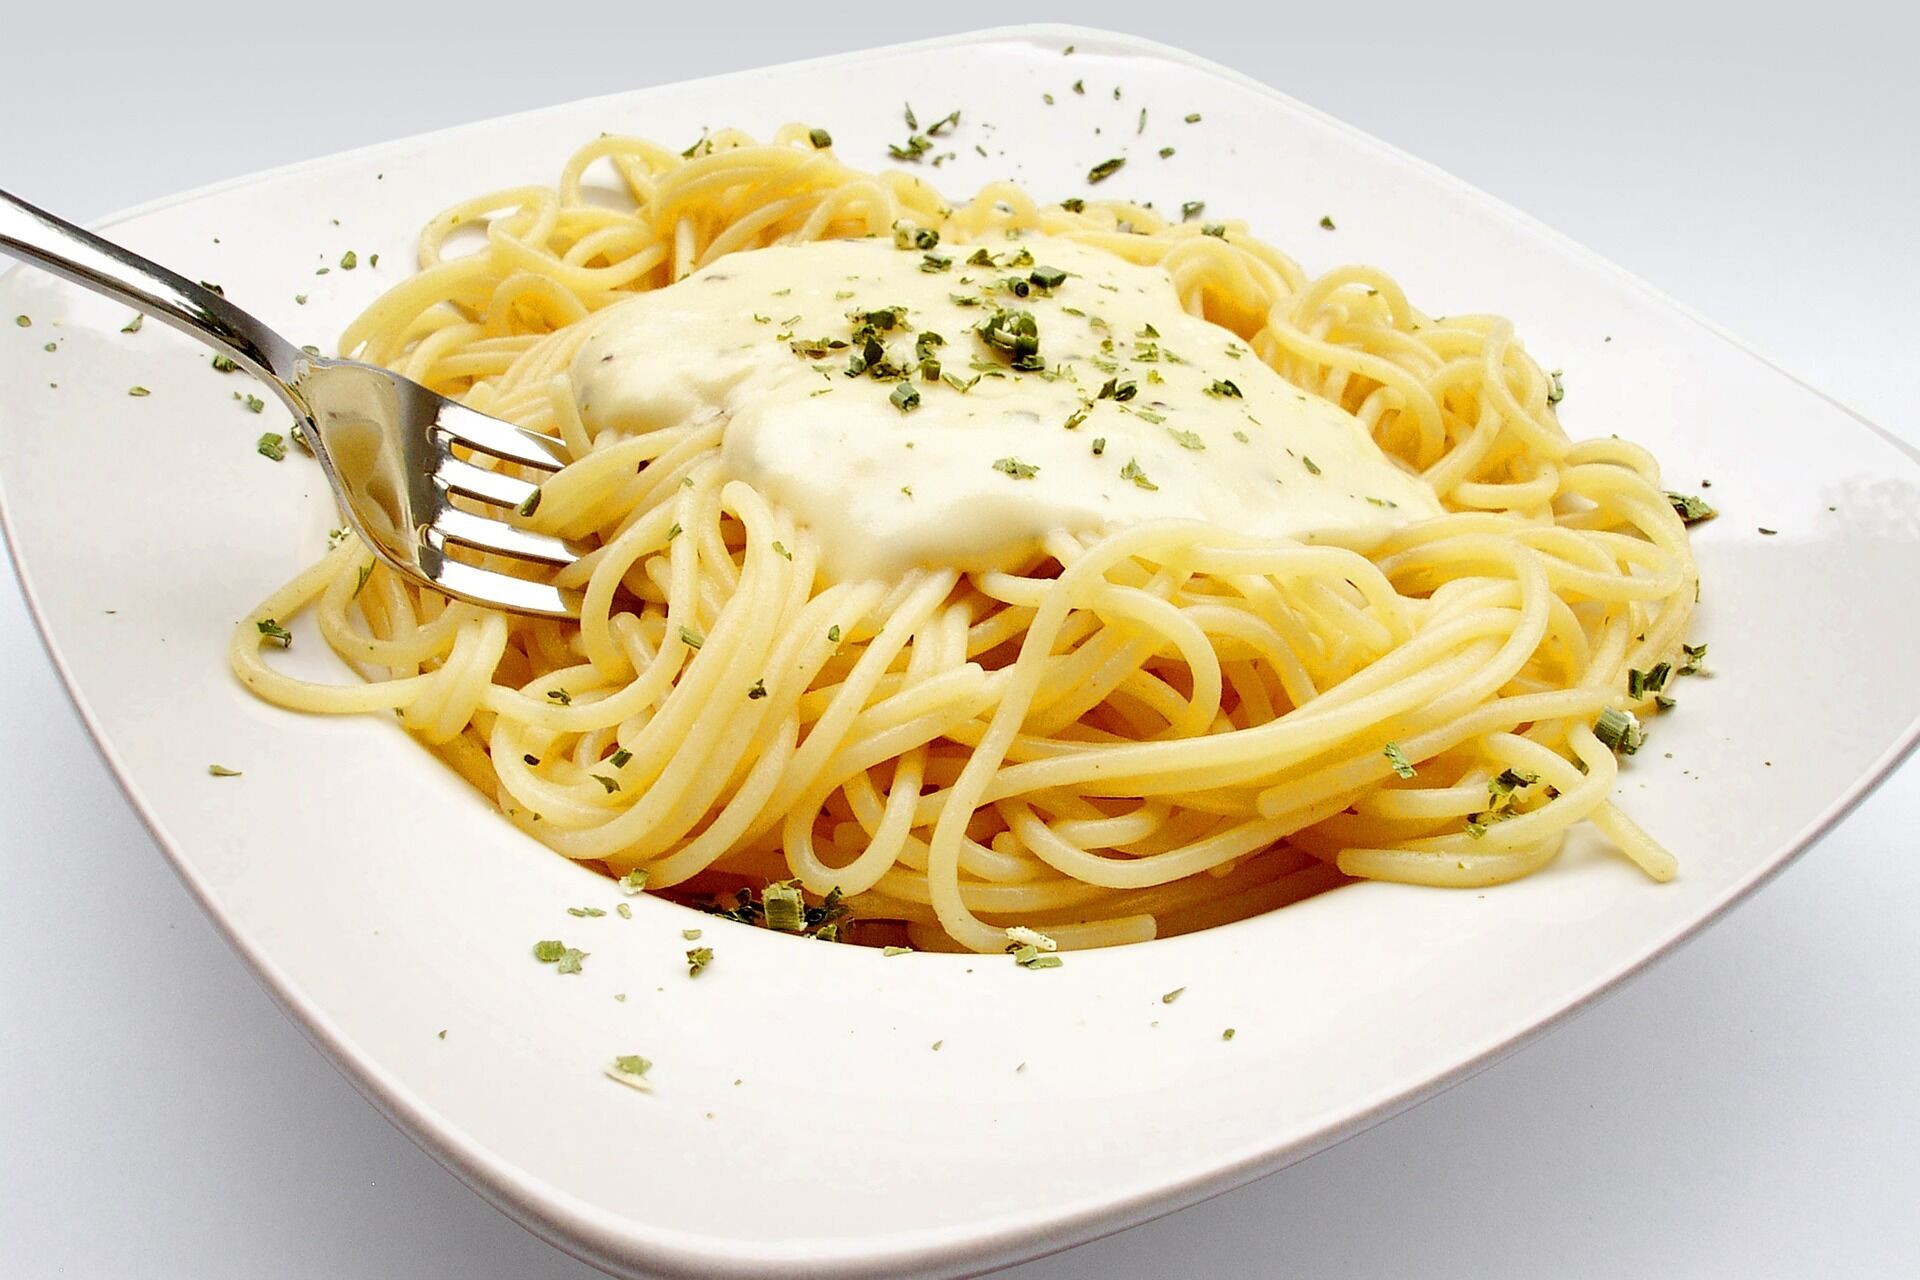 A hearty pasta dish